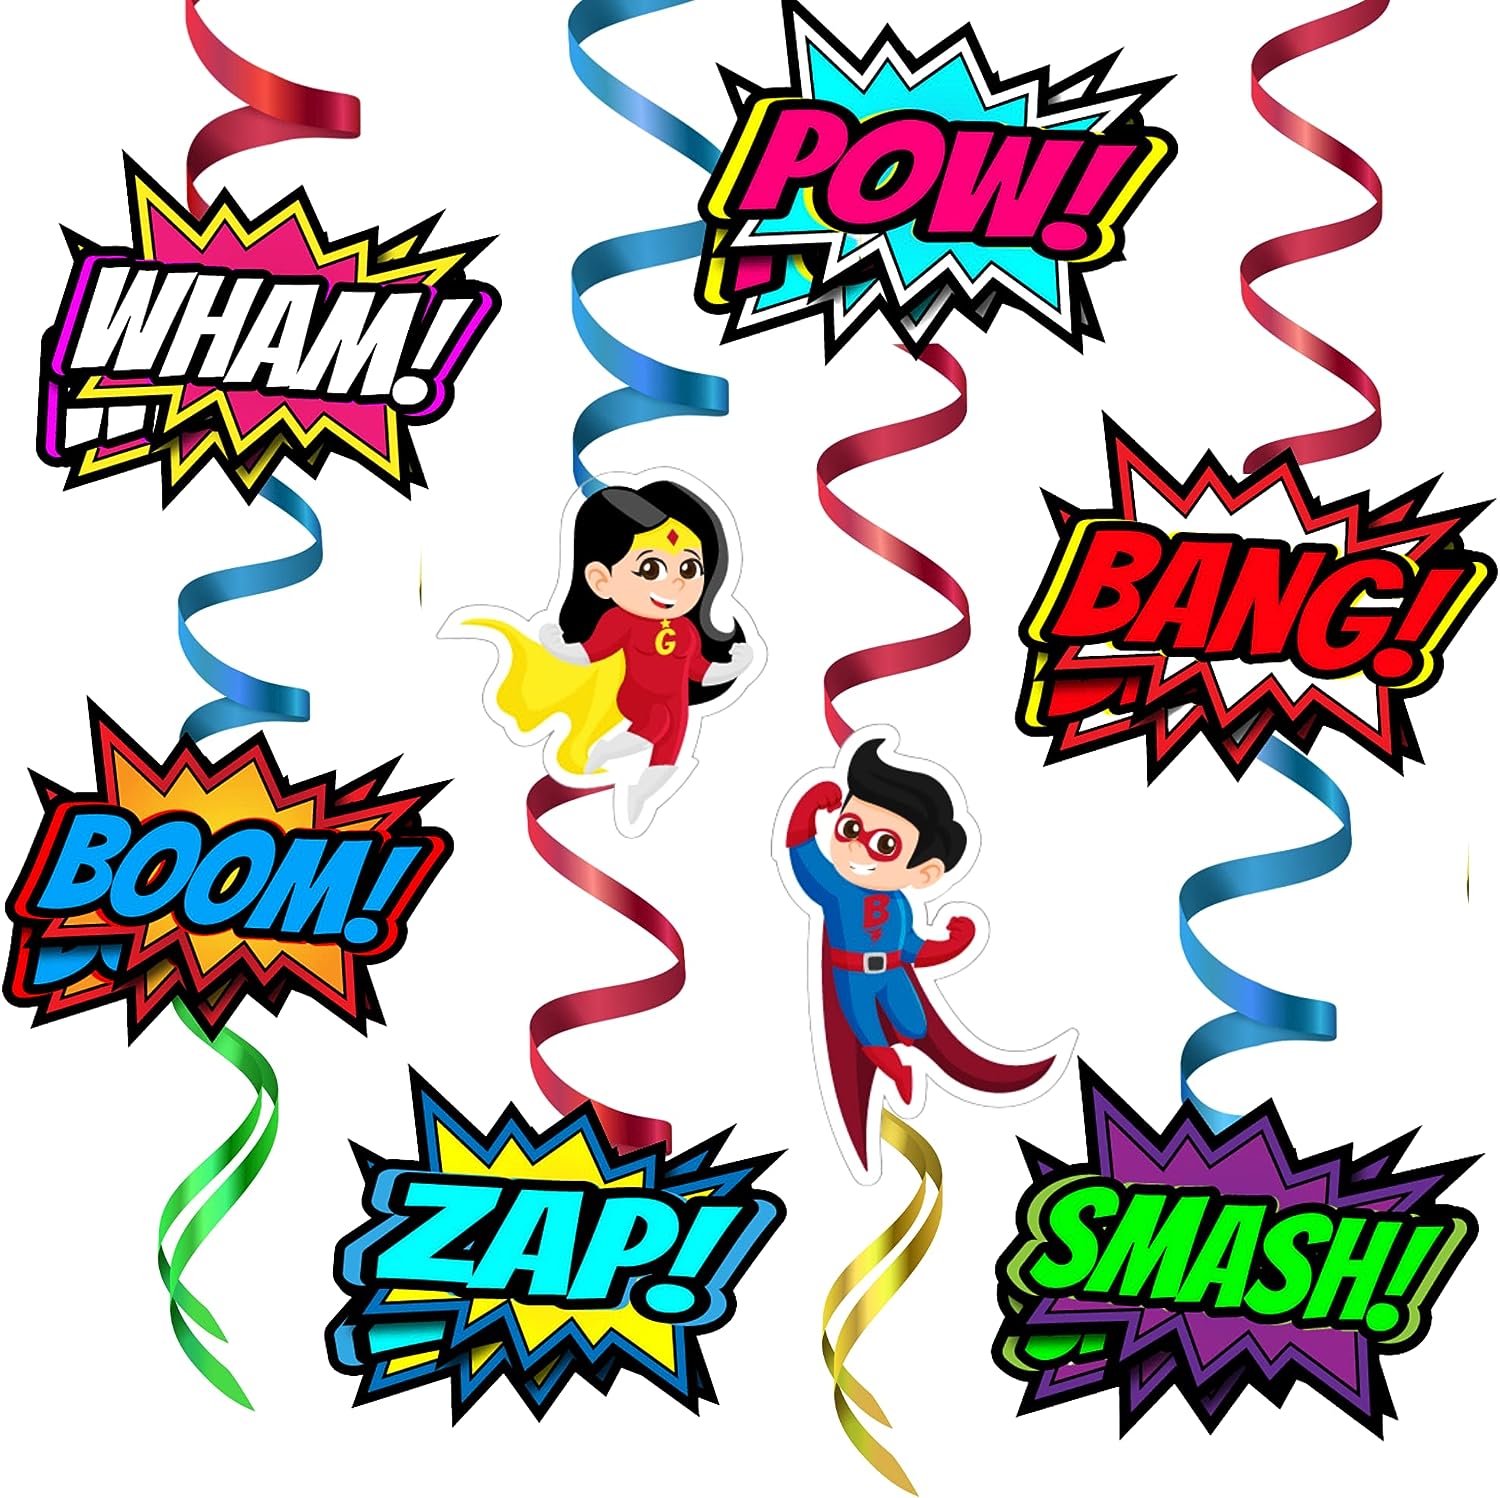 SWIRLS AND CUTOUTS - Contains: Double Printed Comic Superhero Cutouts - Red Single Swirls - Blue Single Swirls - Yellow Double Swirls - Green Double Swirls.